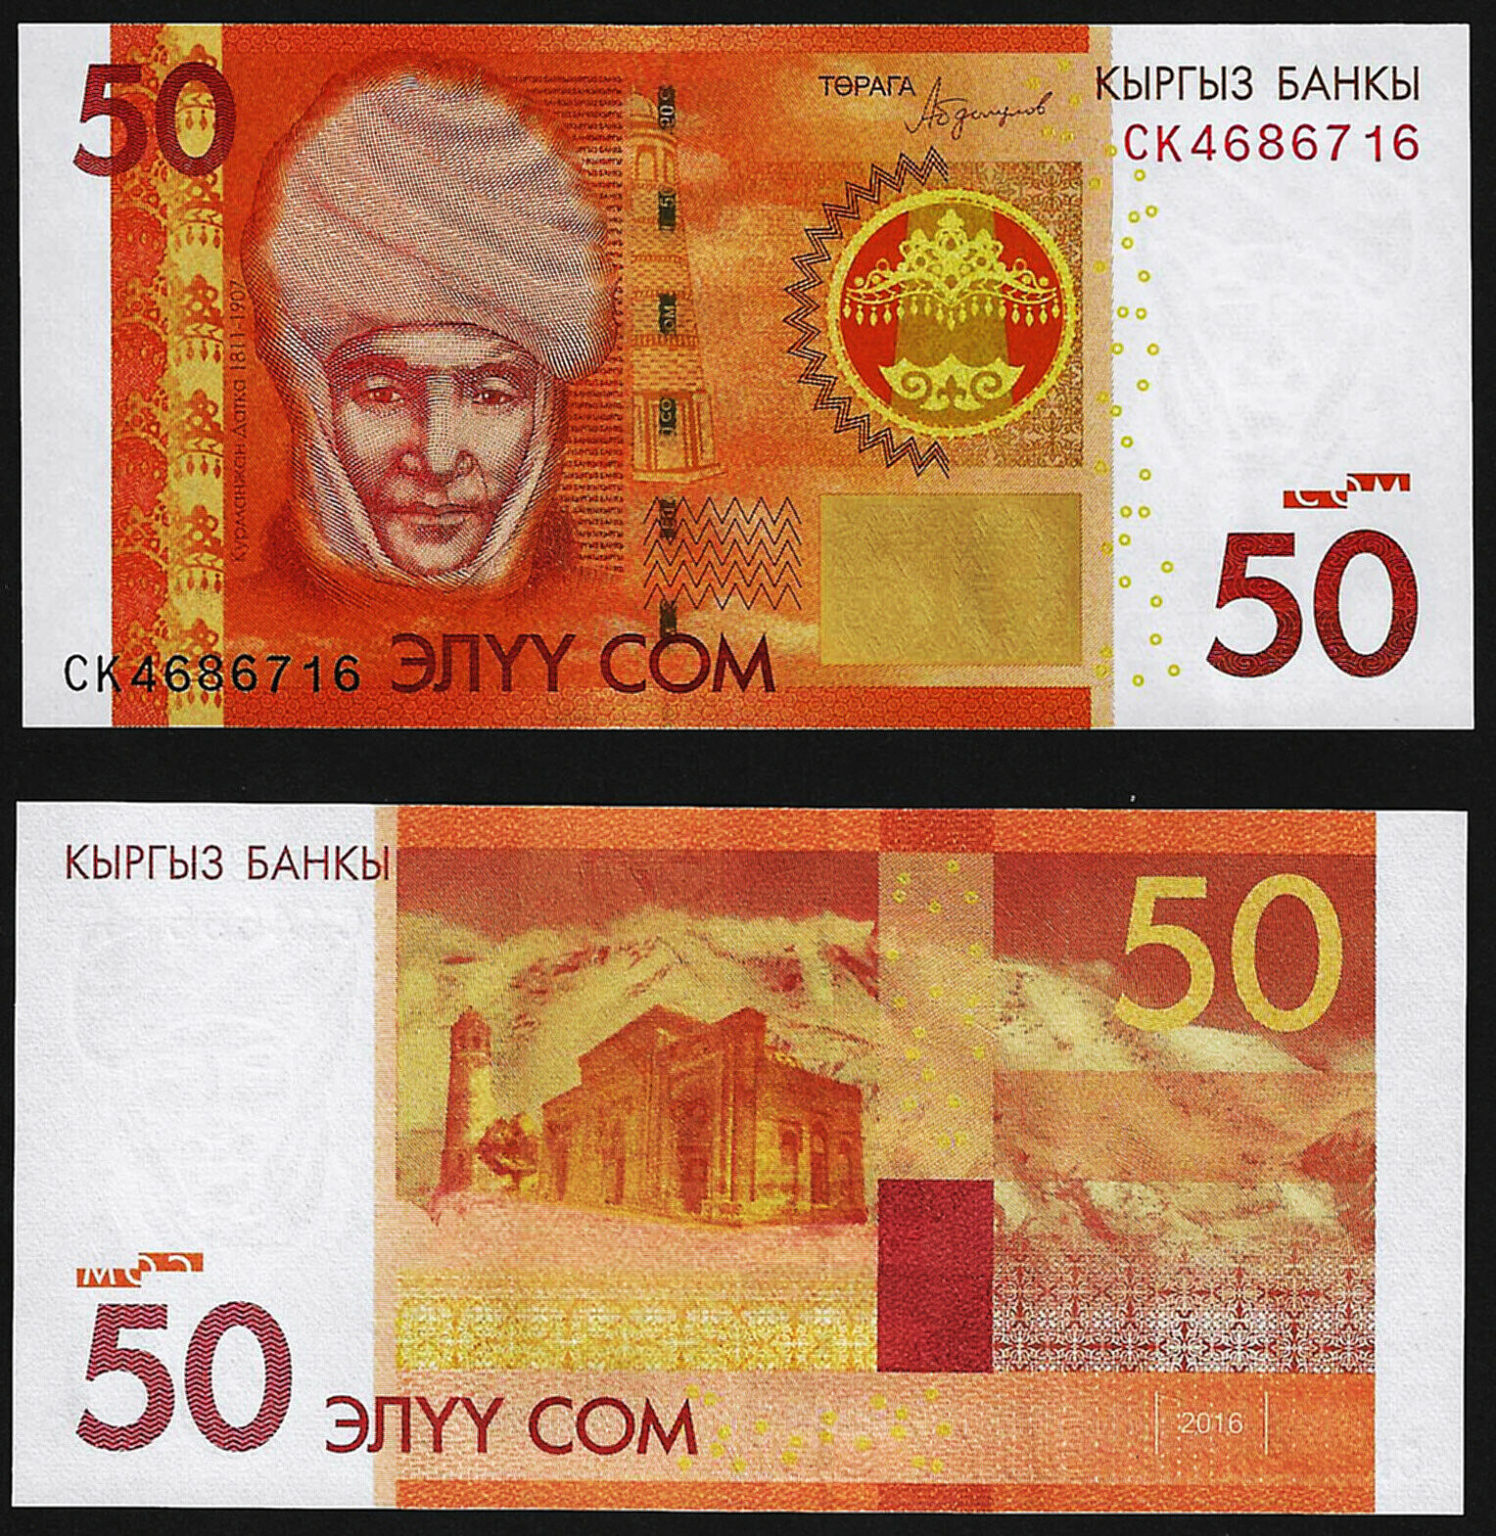 1 Piece Banknotes - Fortumor Numismatic Center